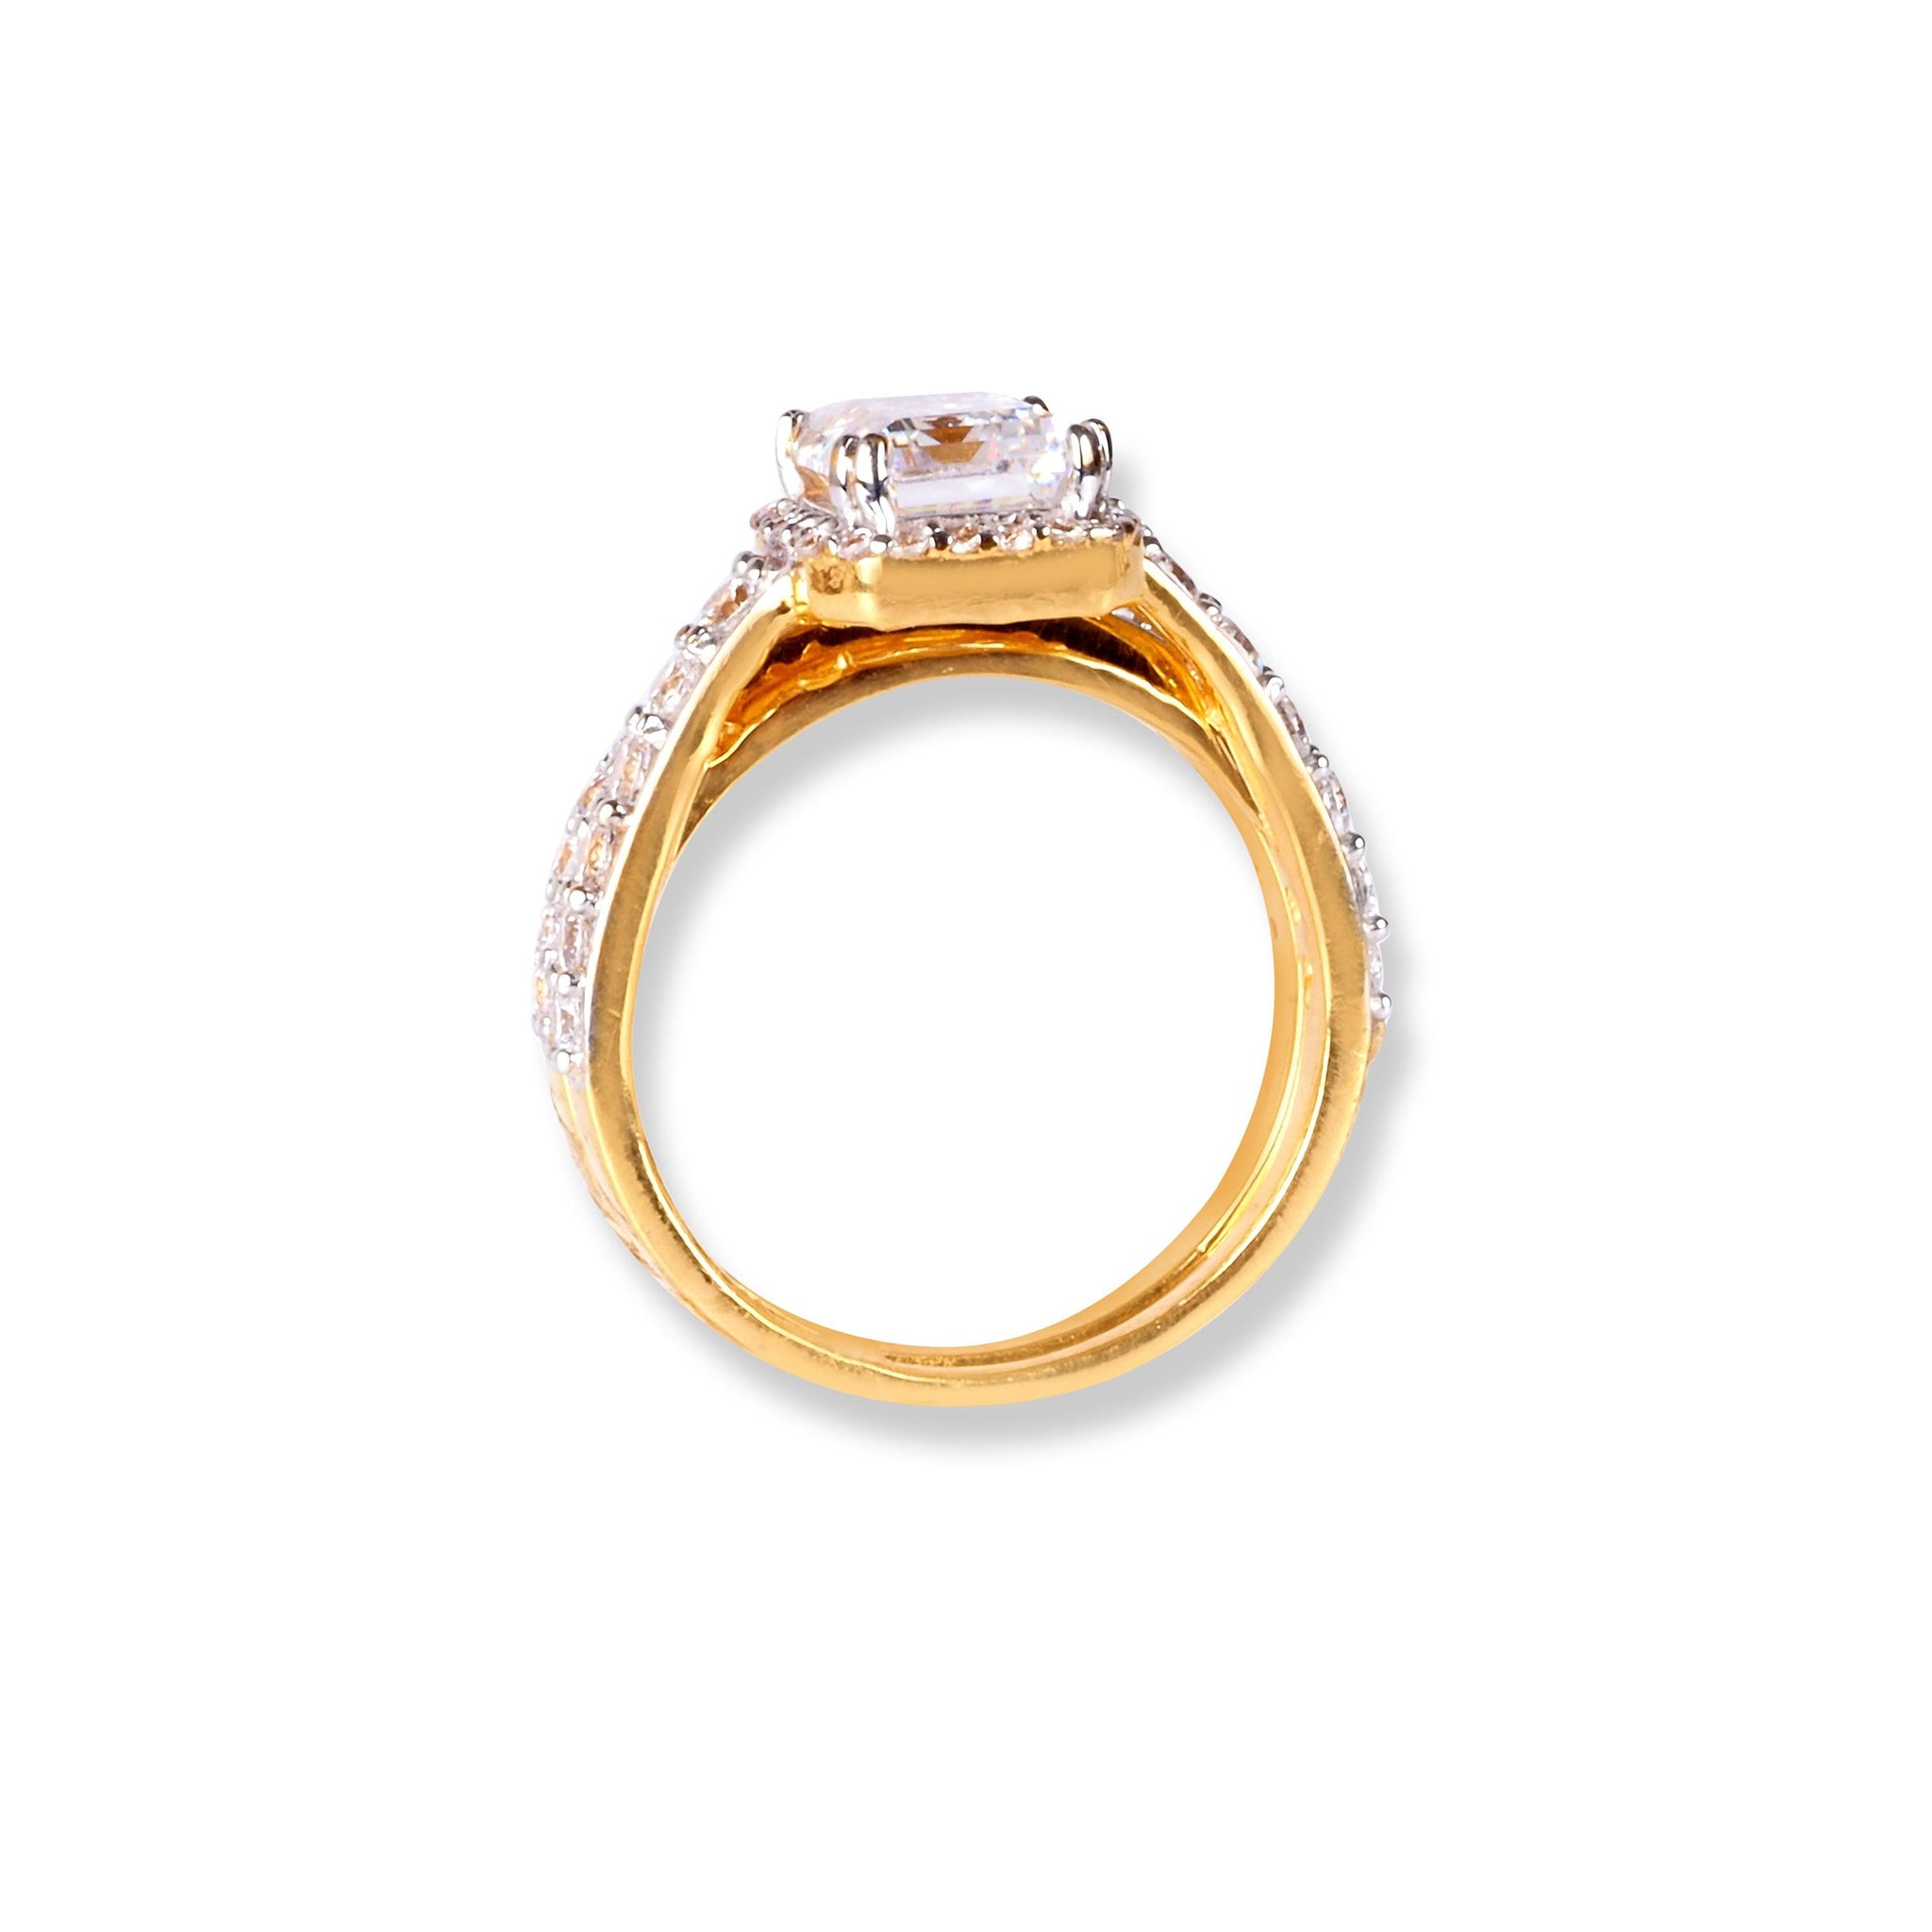 22ct Gold Engagement Ring and Wedding Band Set with Swarovski Zirconia Stones LR-6634